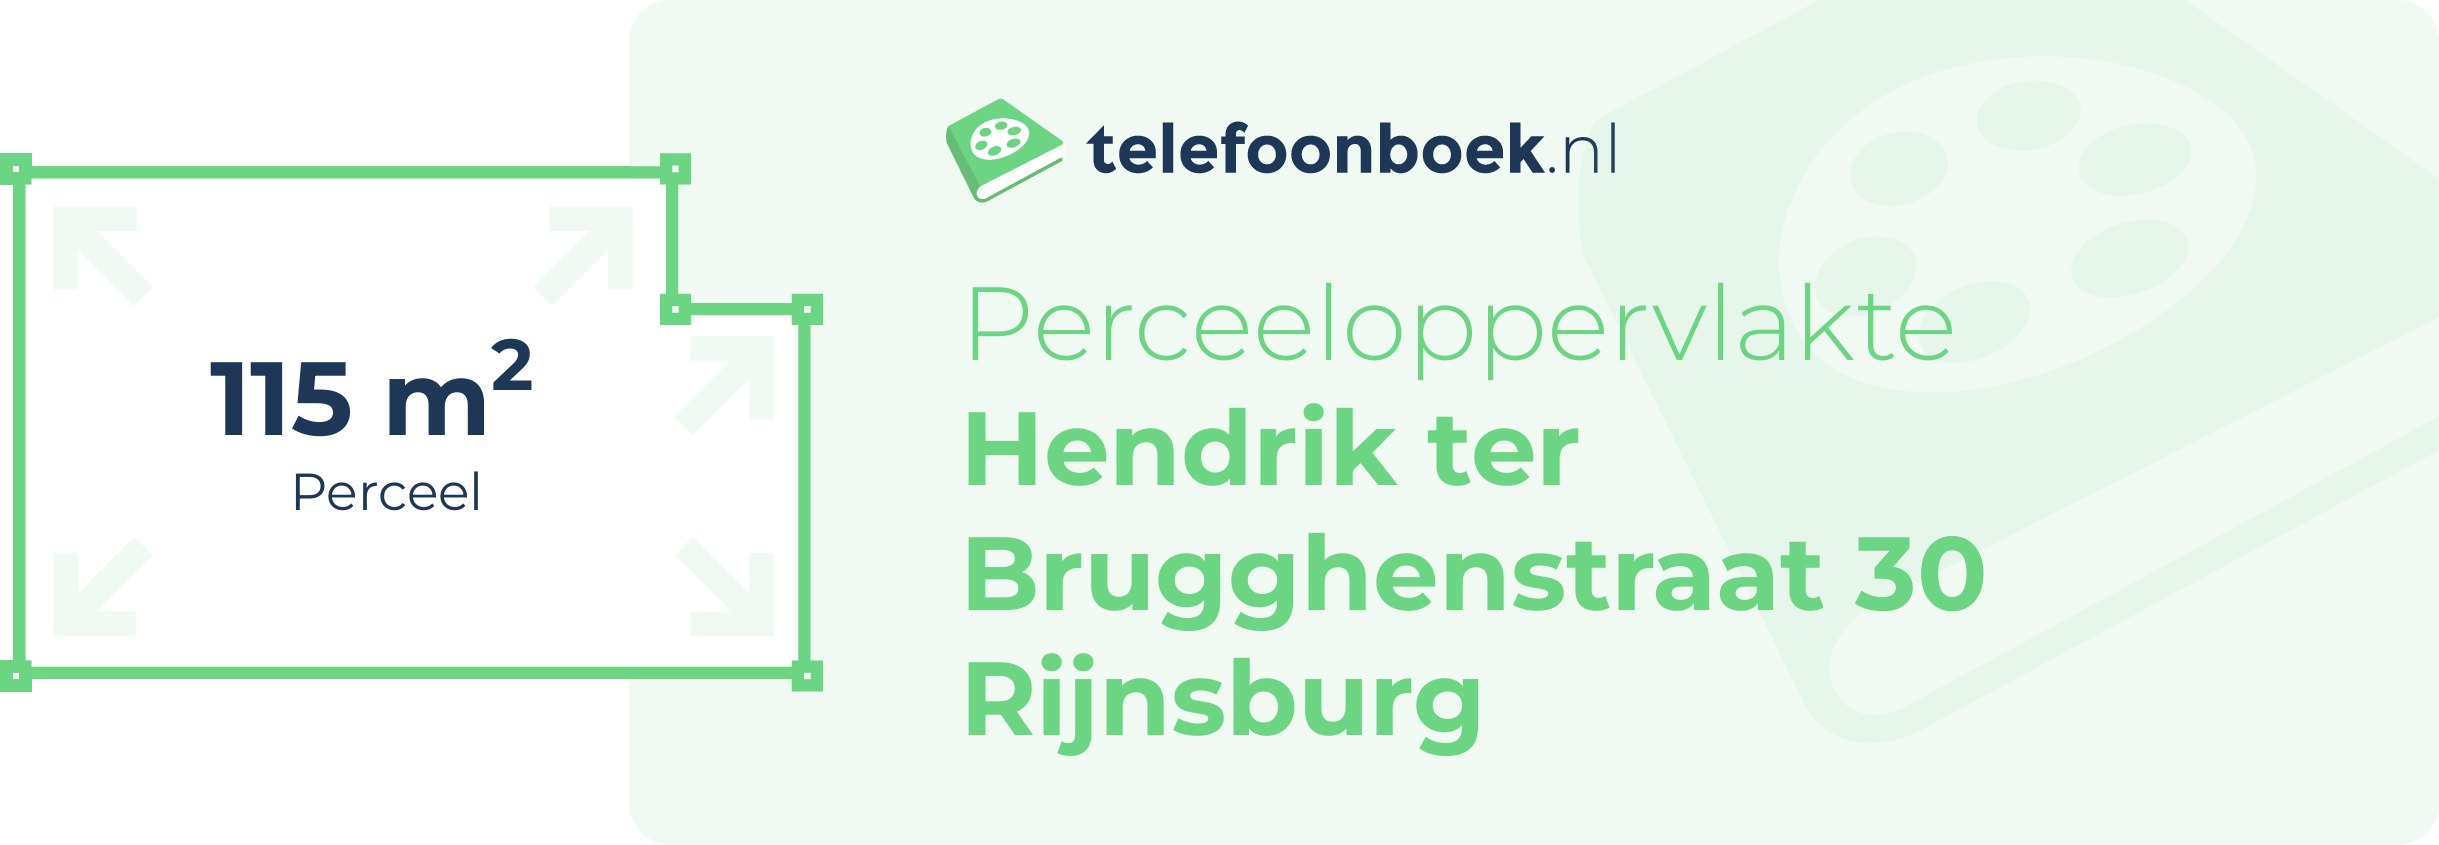 Perceeloppervlakte Hendrik Ter Brugghenstraat 30 Rijnsburg